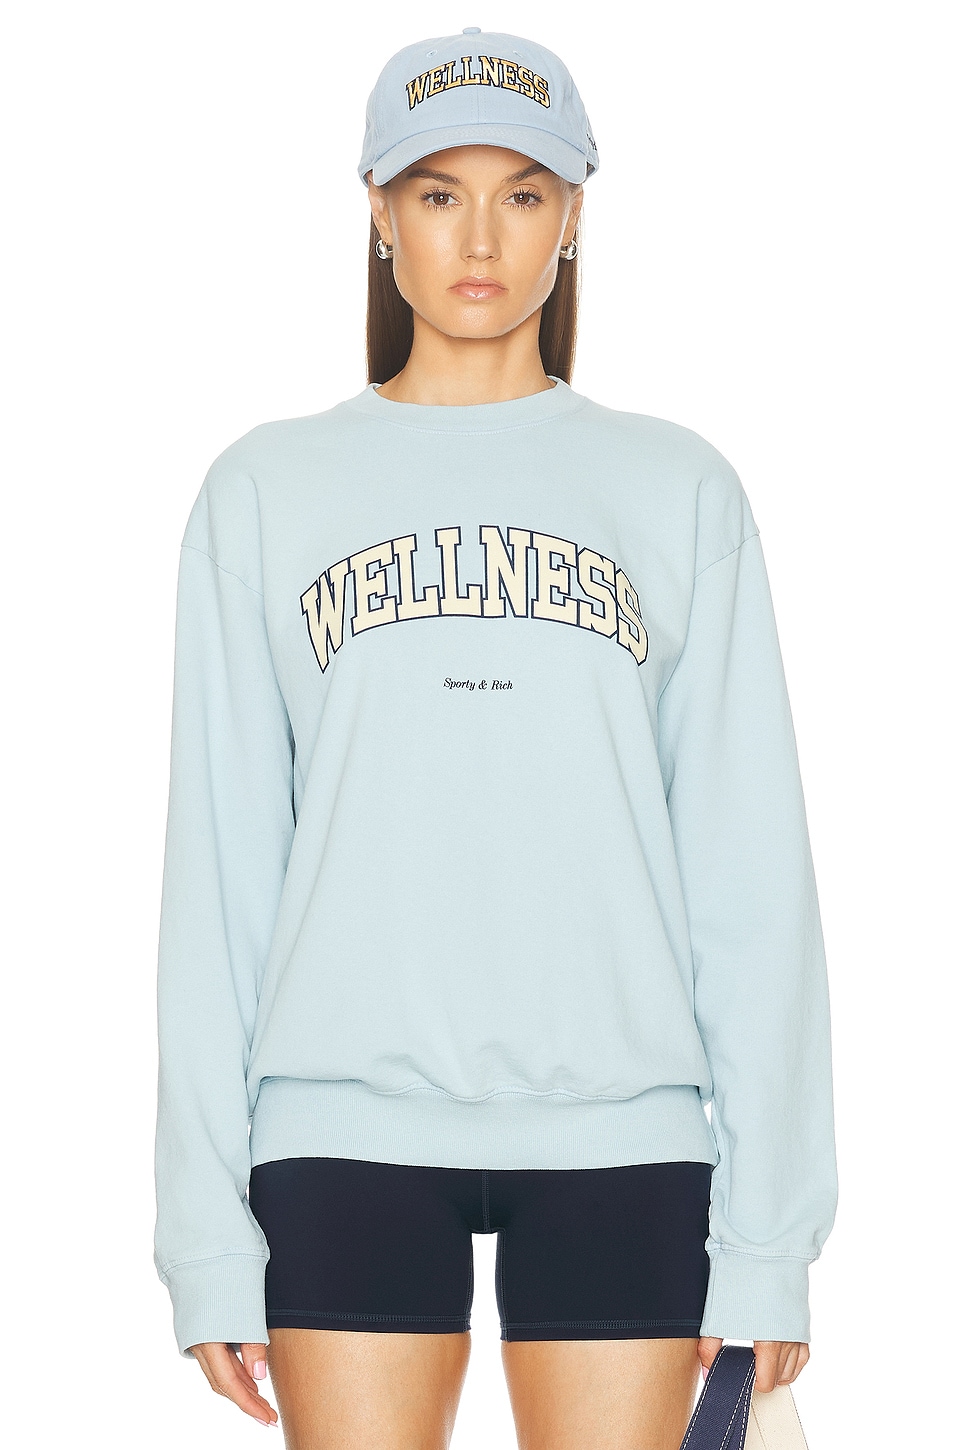 Image 1 of Sporty & Rich Wellness Ivy Crewneck Sweatshirt in China Blue, Almond, & Navy